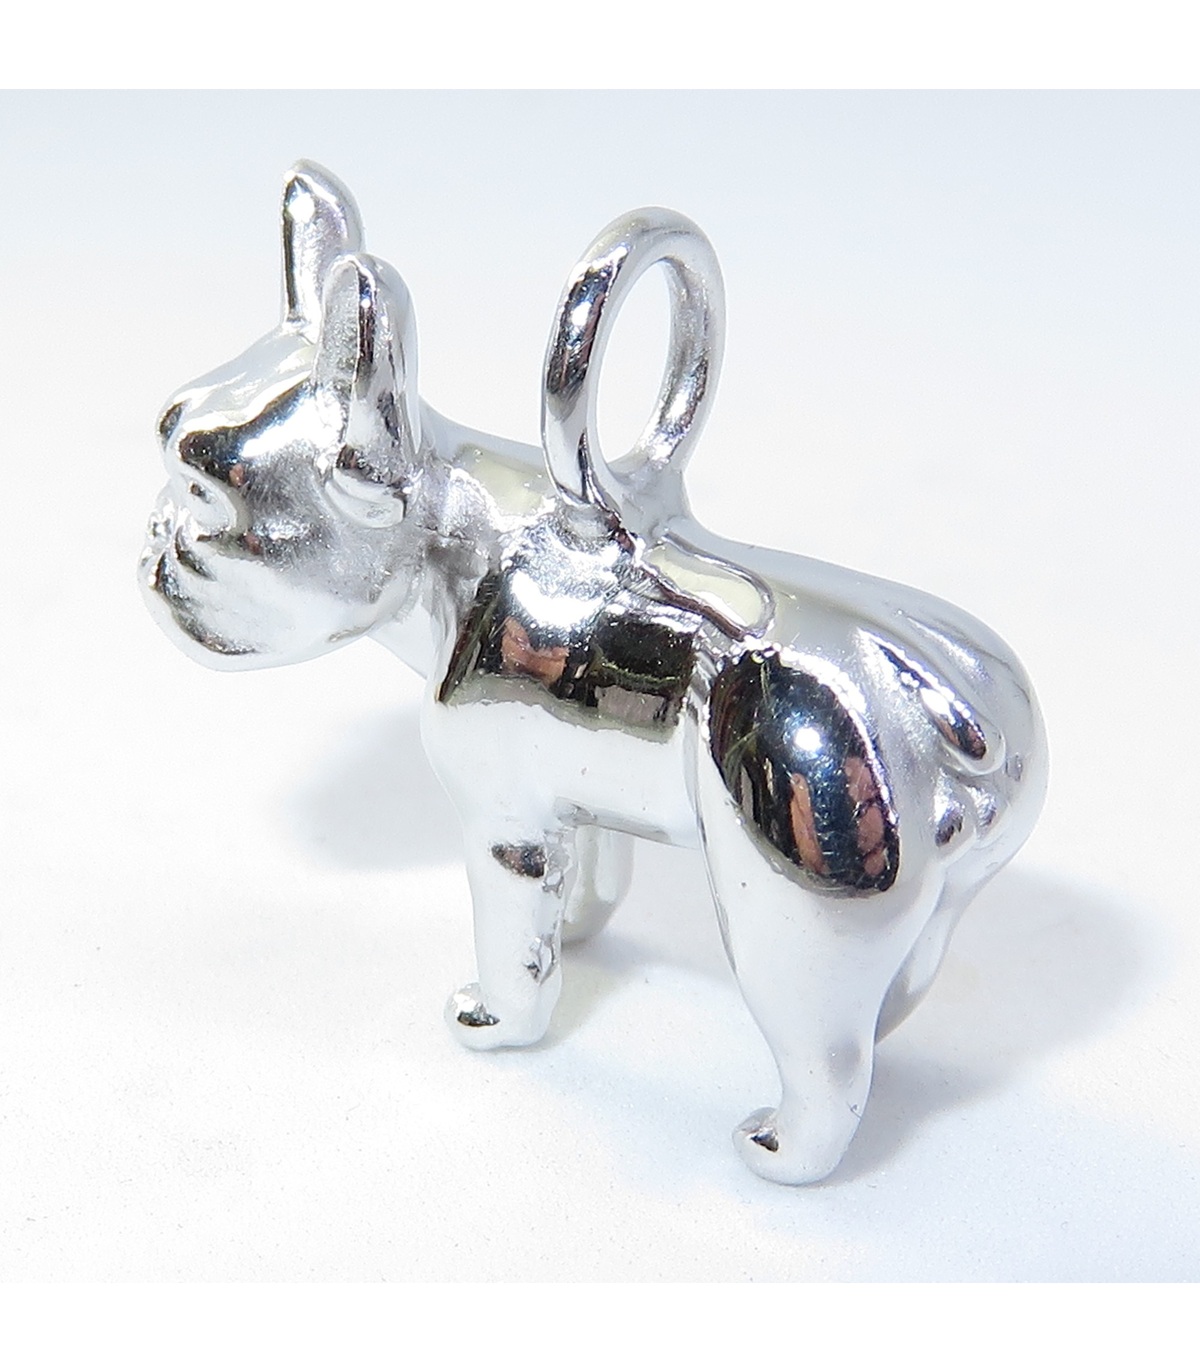 https://www.maldonjewellery.co.uk/89010-superlarge_default/french-bulldog-sterling-silver-pendant-925-x-1-bulldogs-pendants-sfp.jpg